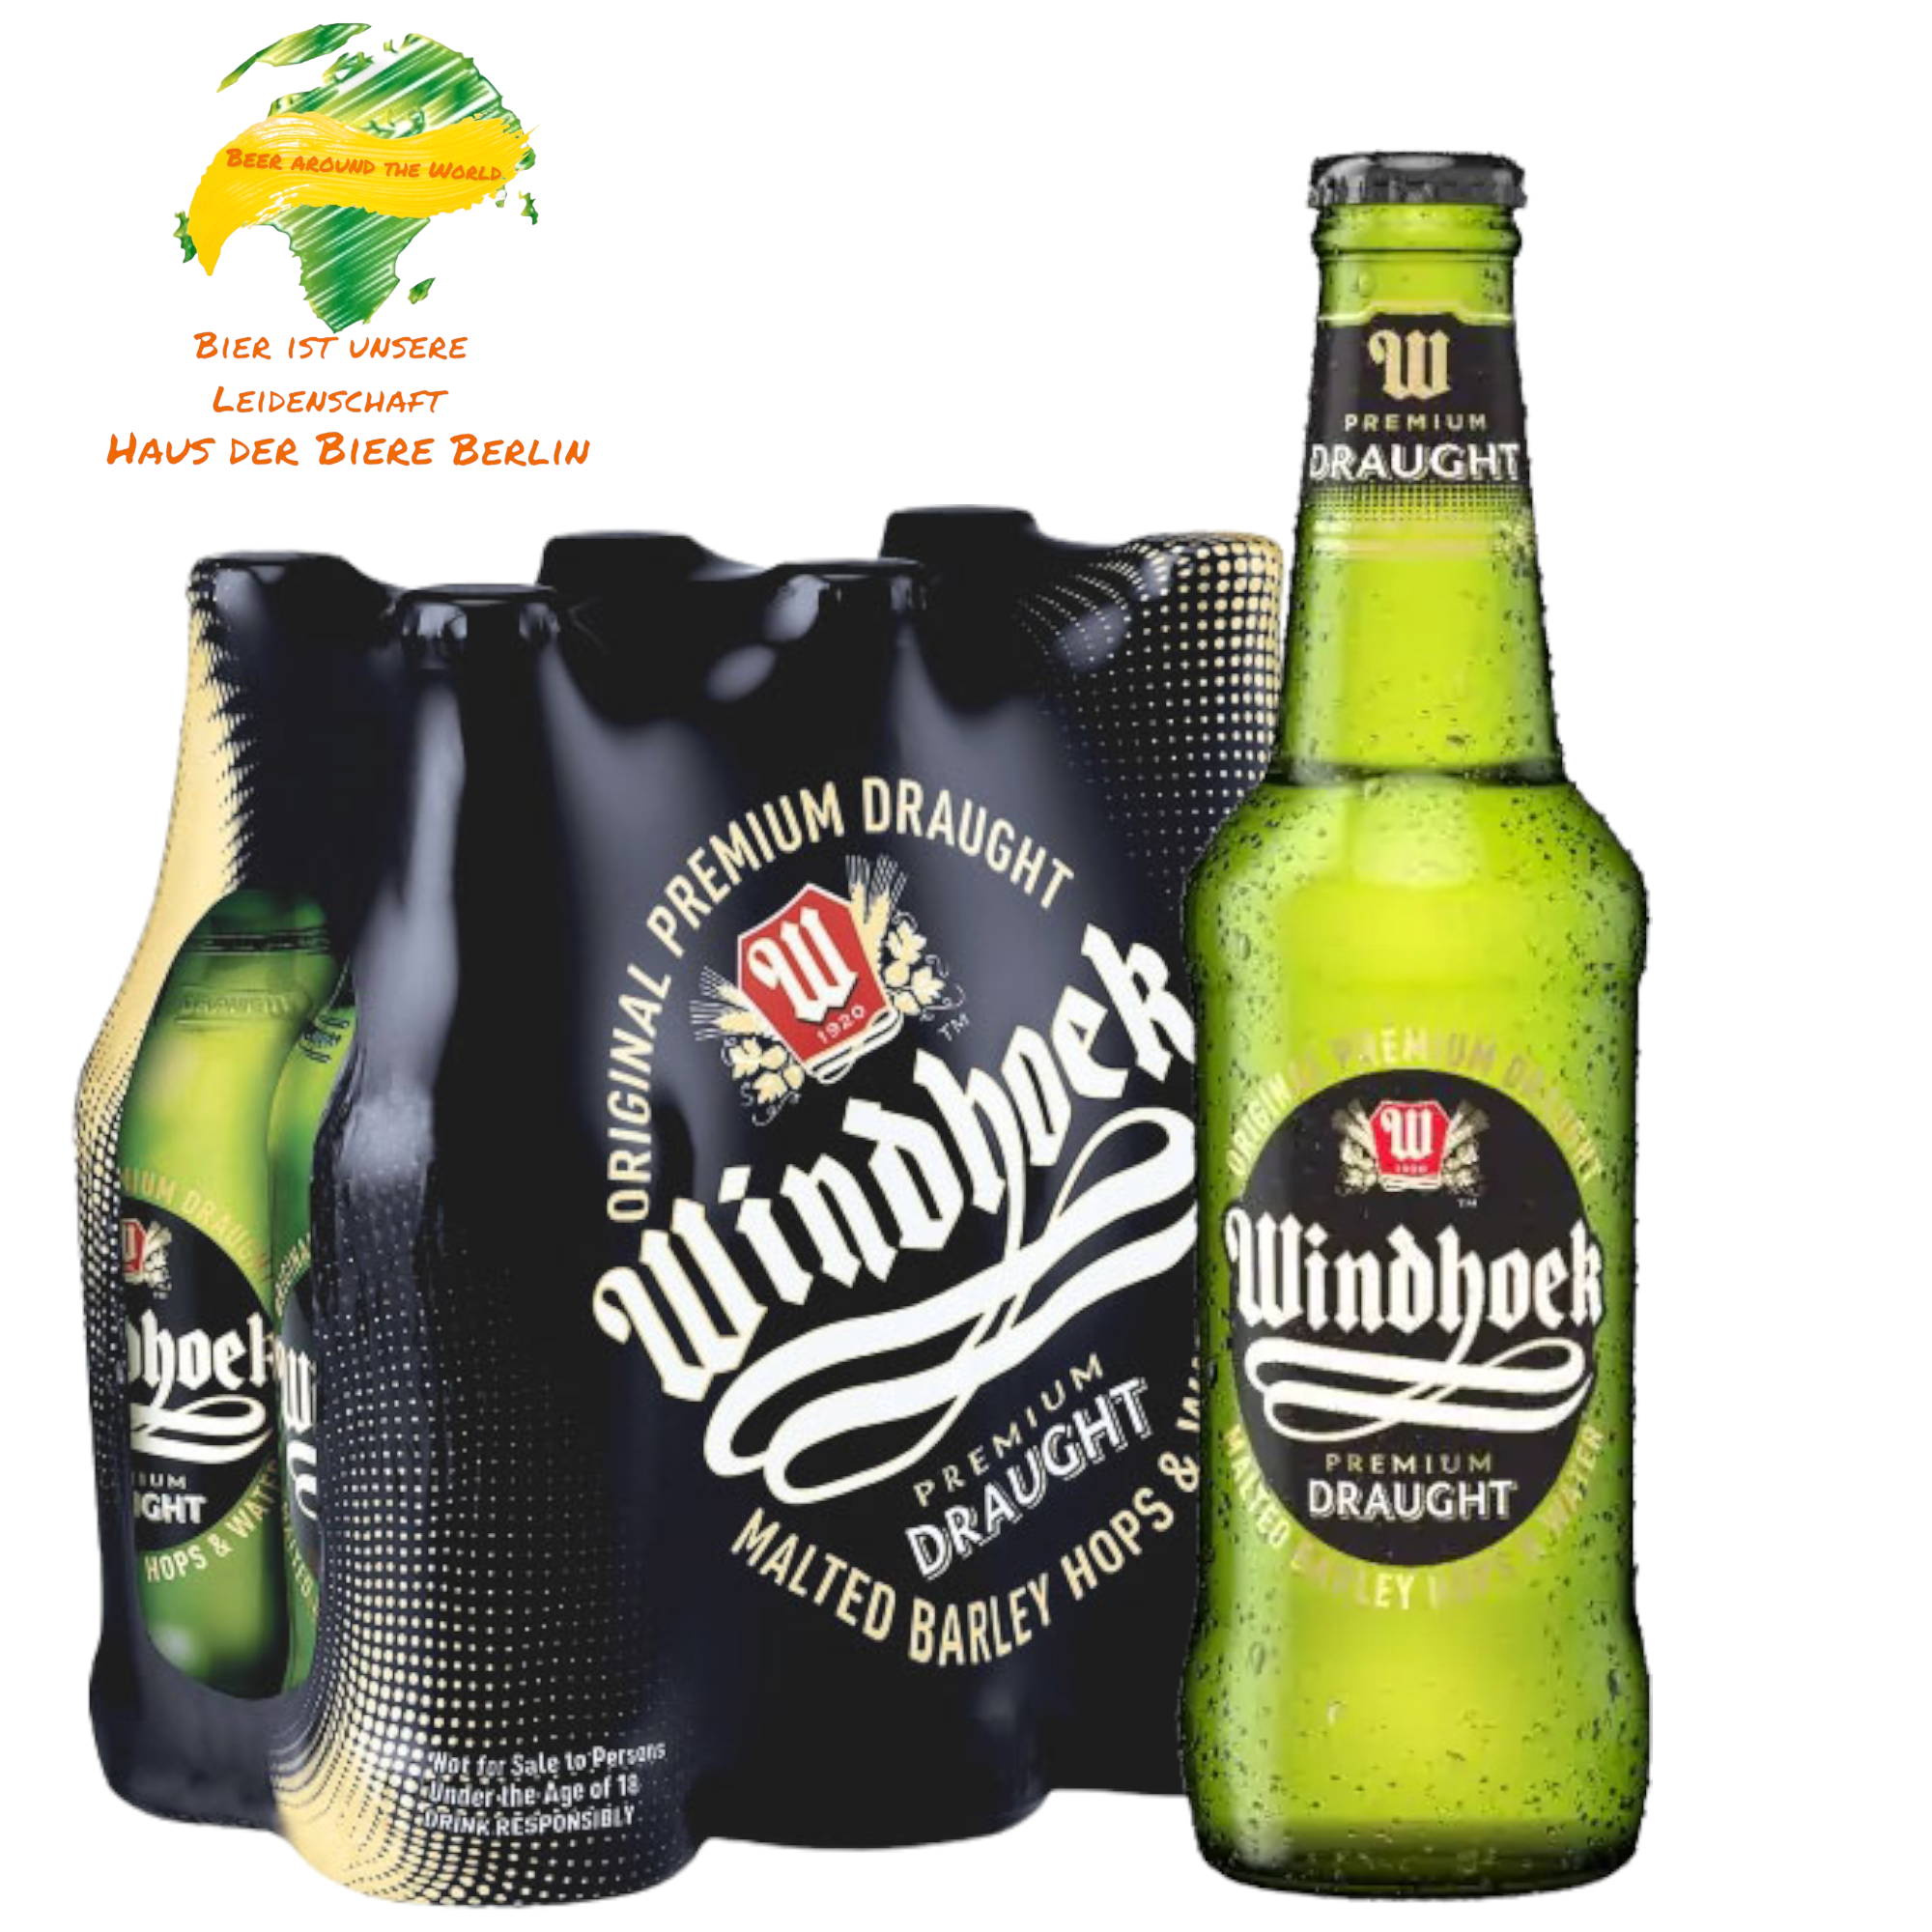 Windhoek Draught 0,33l - Das Original aus Namibia mit 4 % Alc.